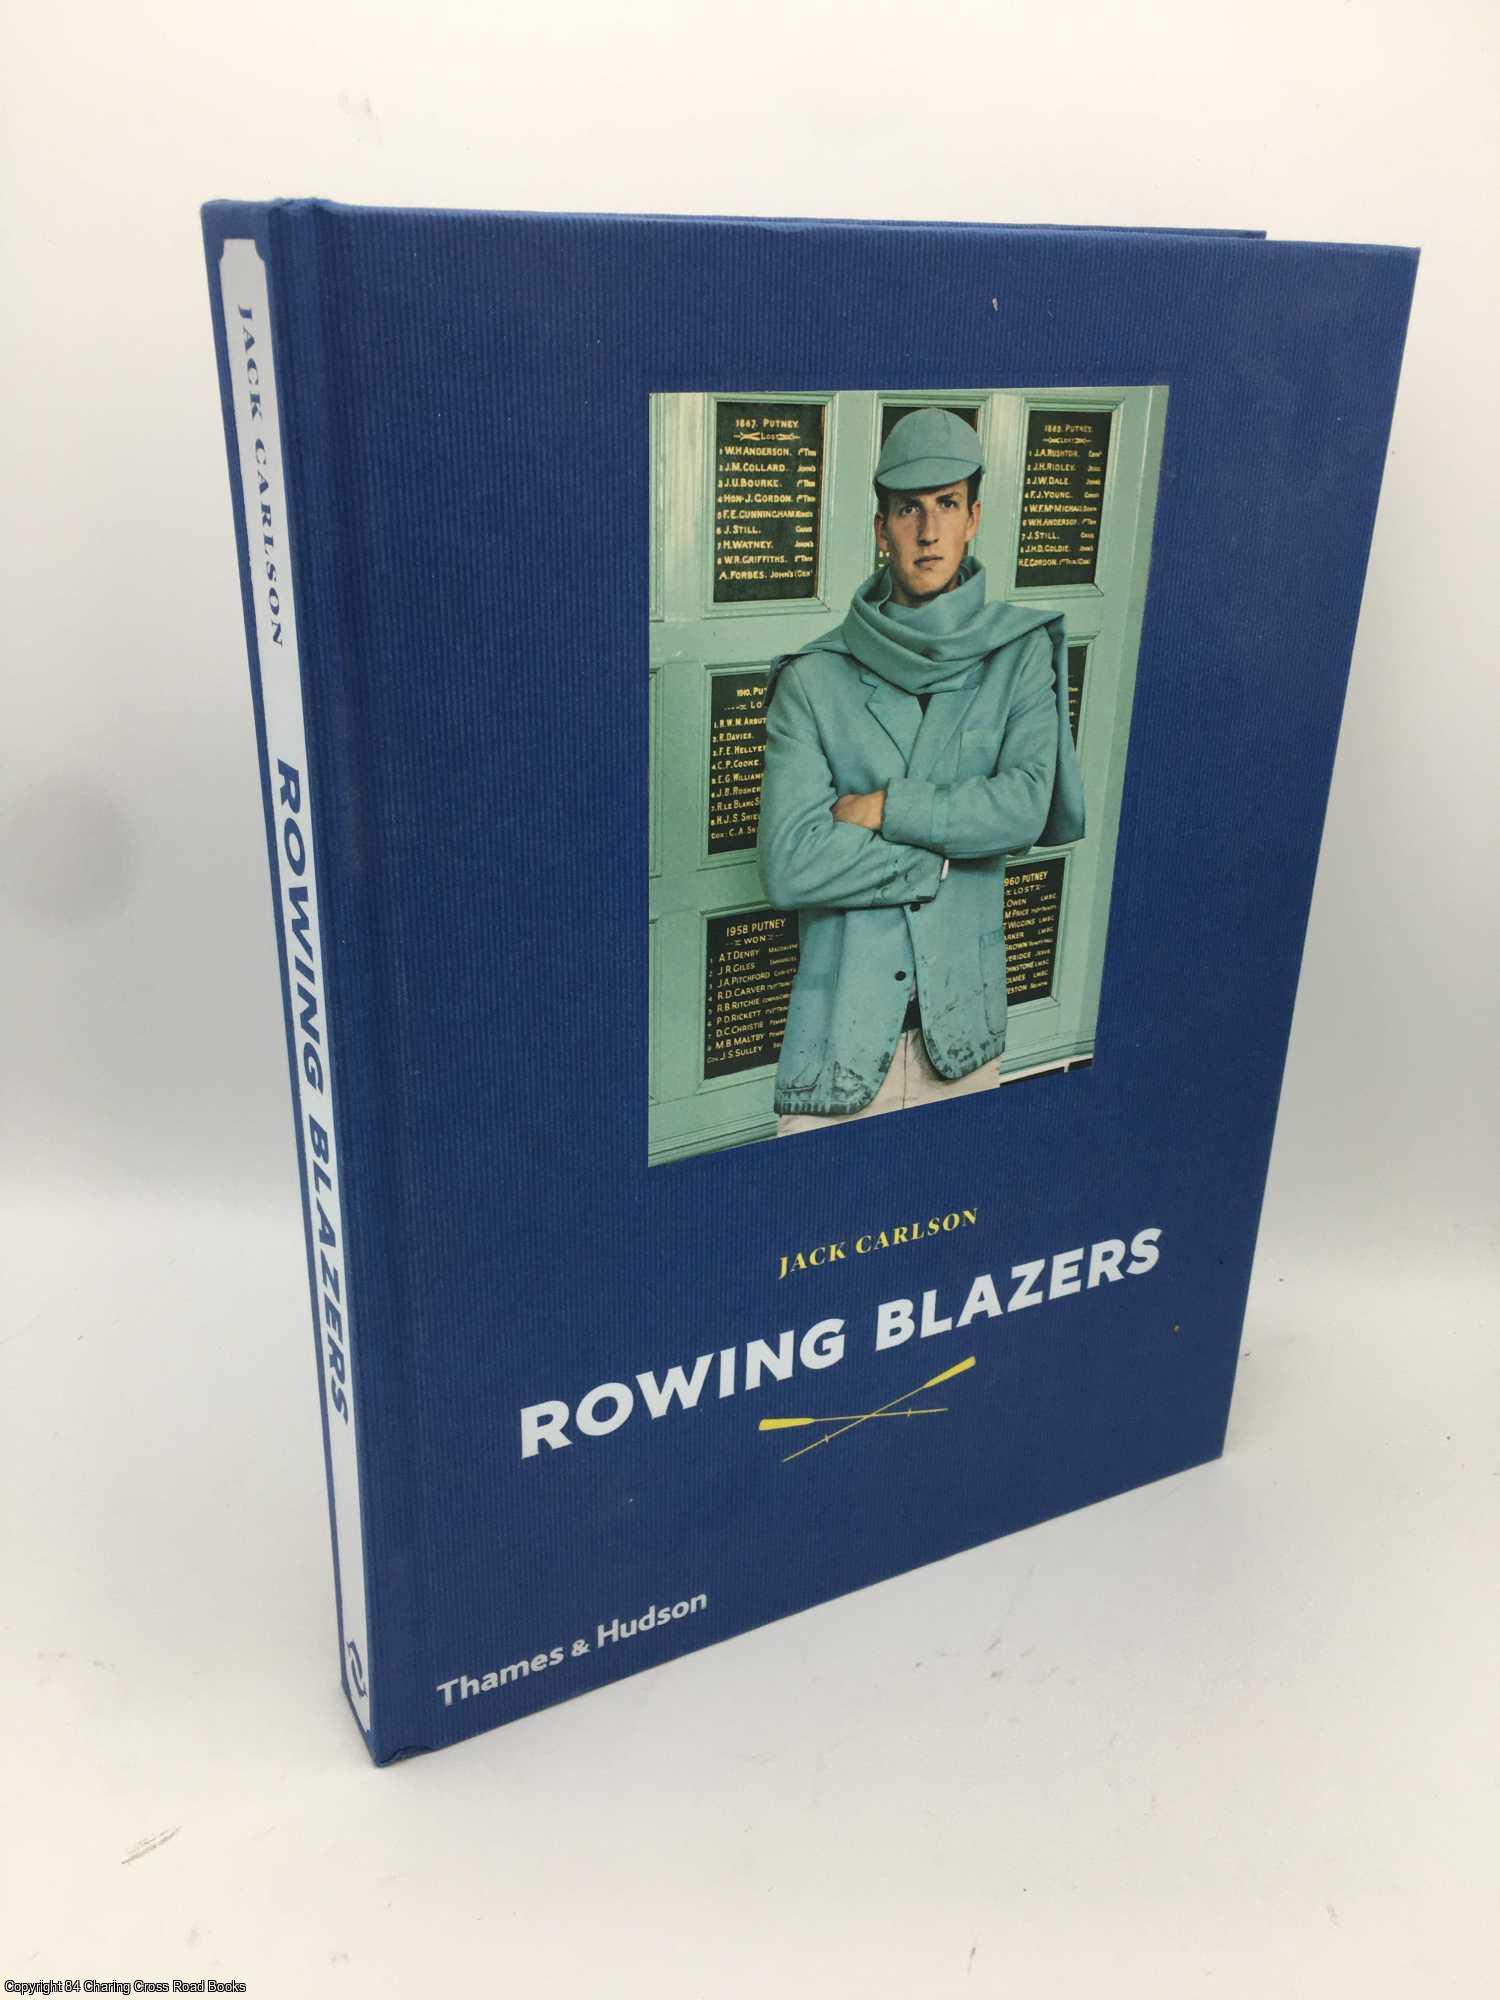 Carlson, Jack - Rowing Blazers